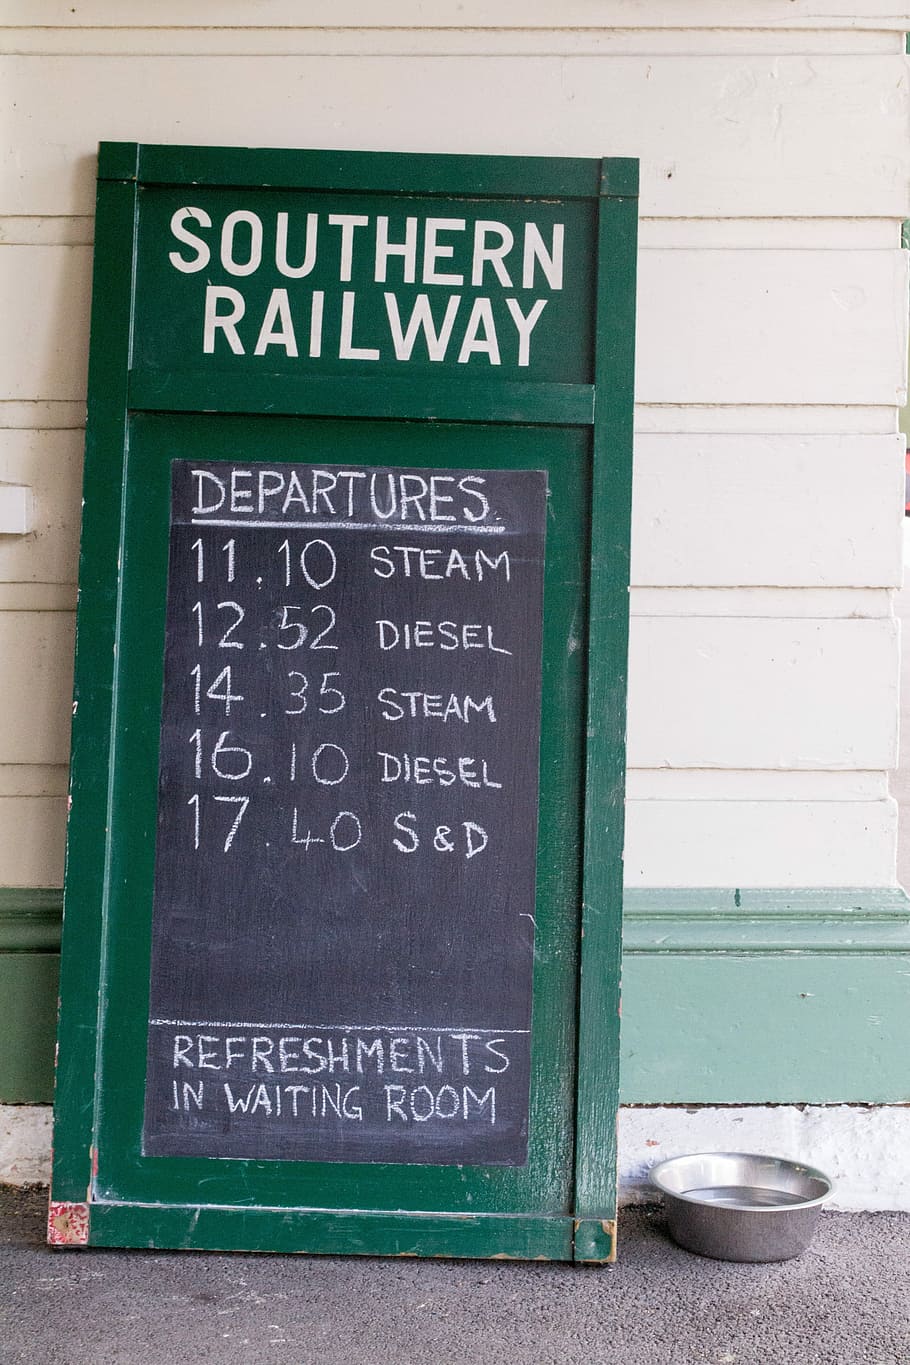 Railway, Chalkboard, Timetable, Rail, board, transport, transportation, travel, train, departures